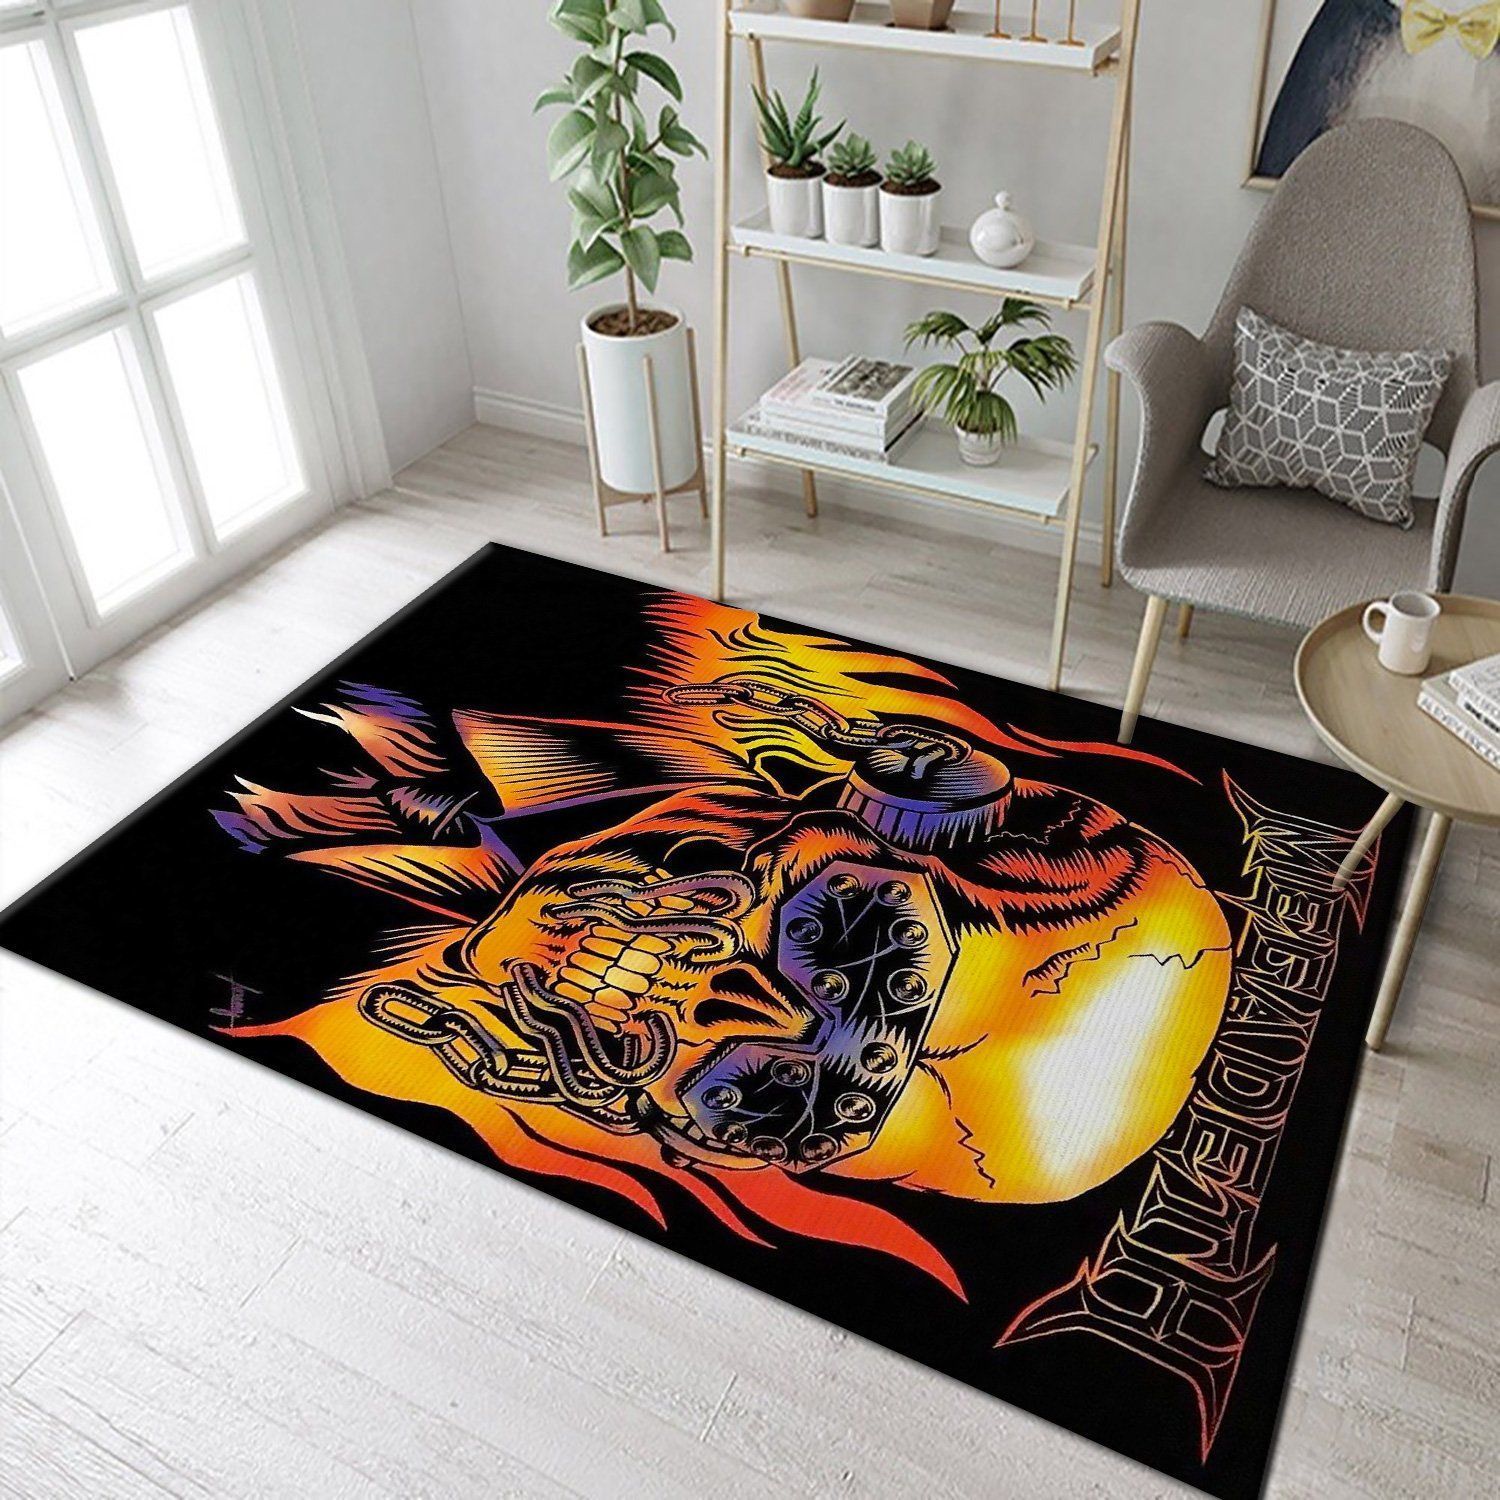 Megadeth Band Area Rug Music Floor Decor 191012 Carpet Titles - Indoor Outdoor Rugs 3